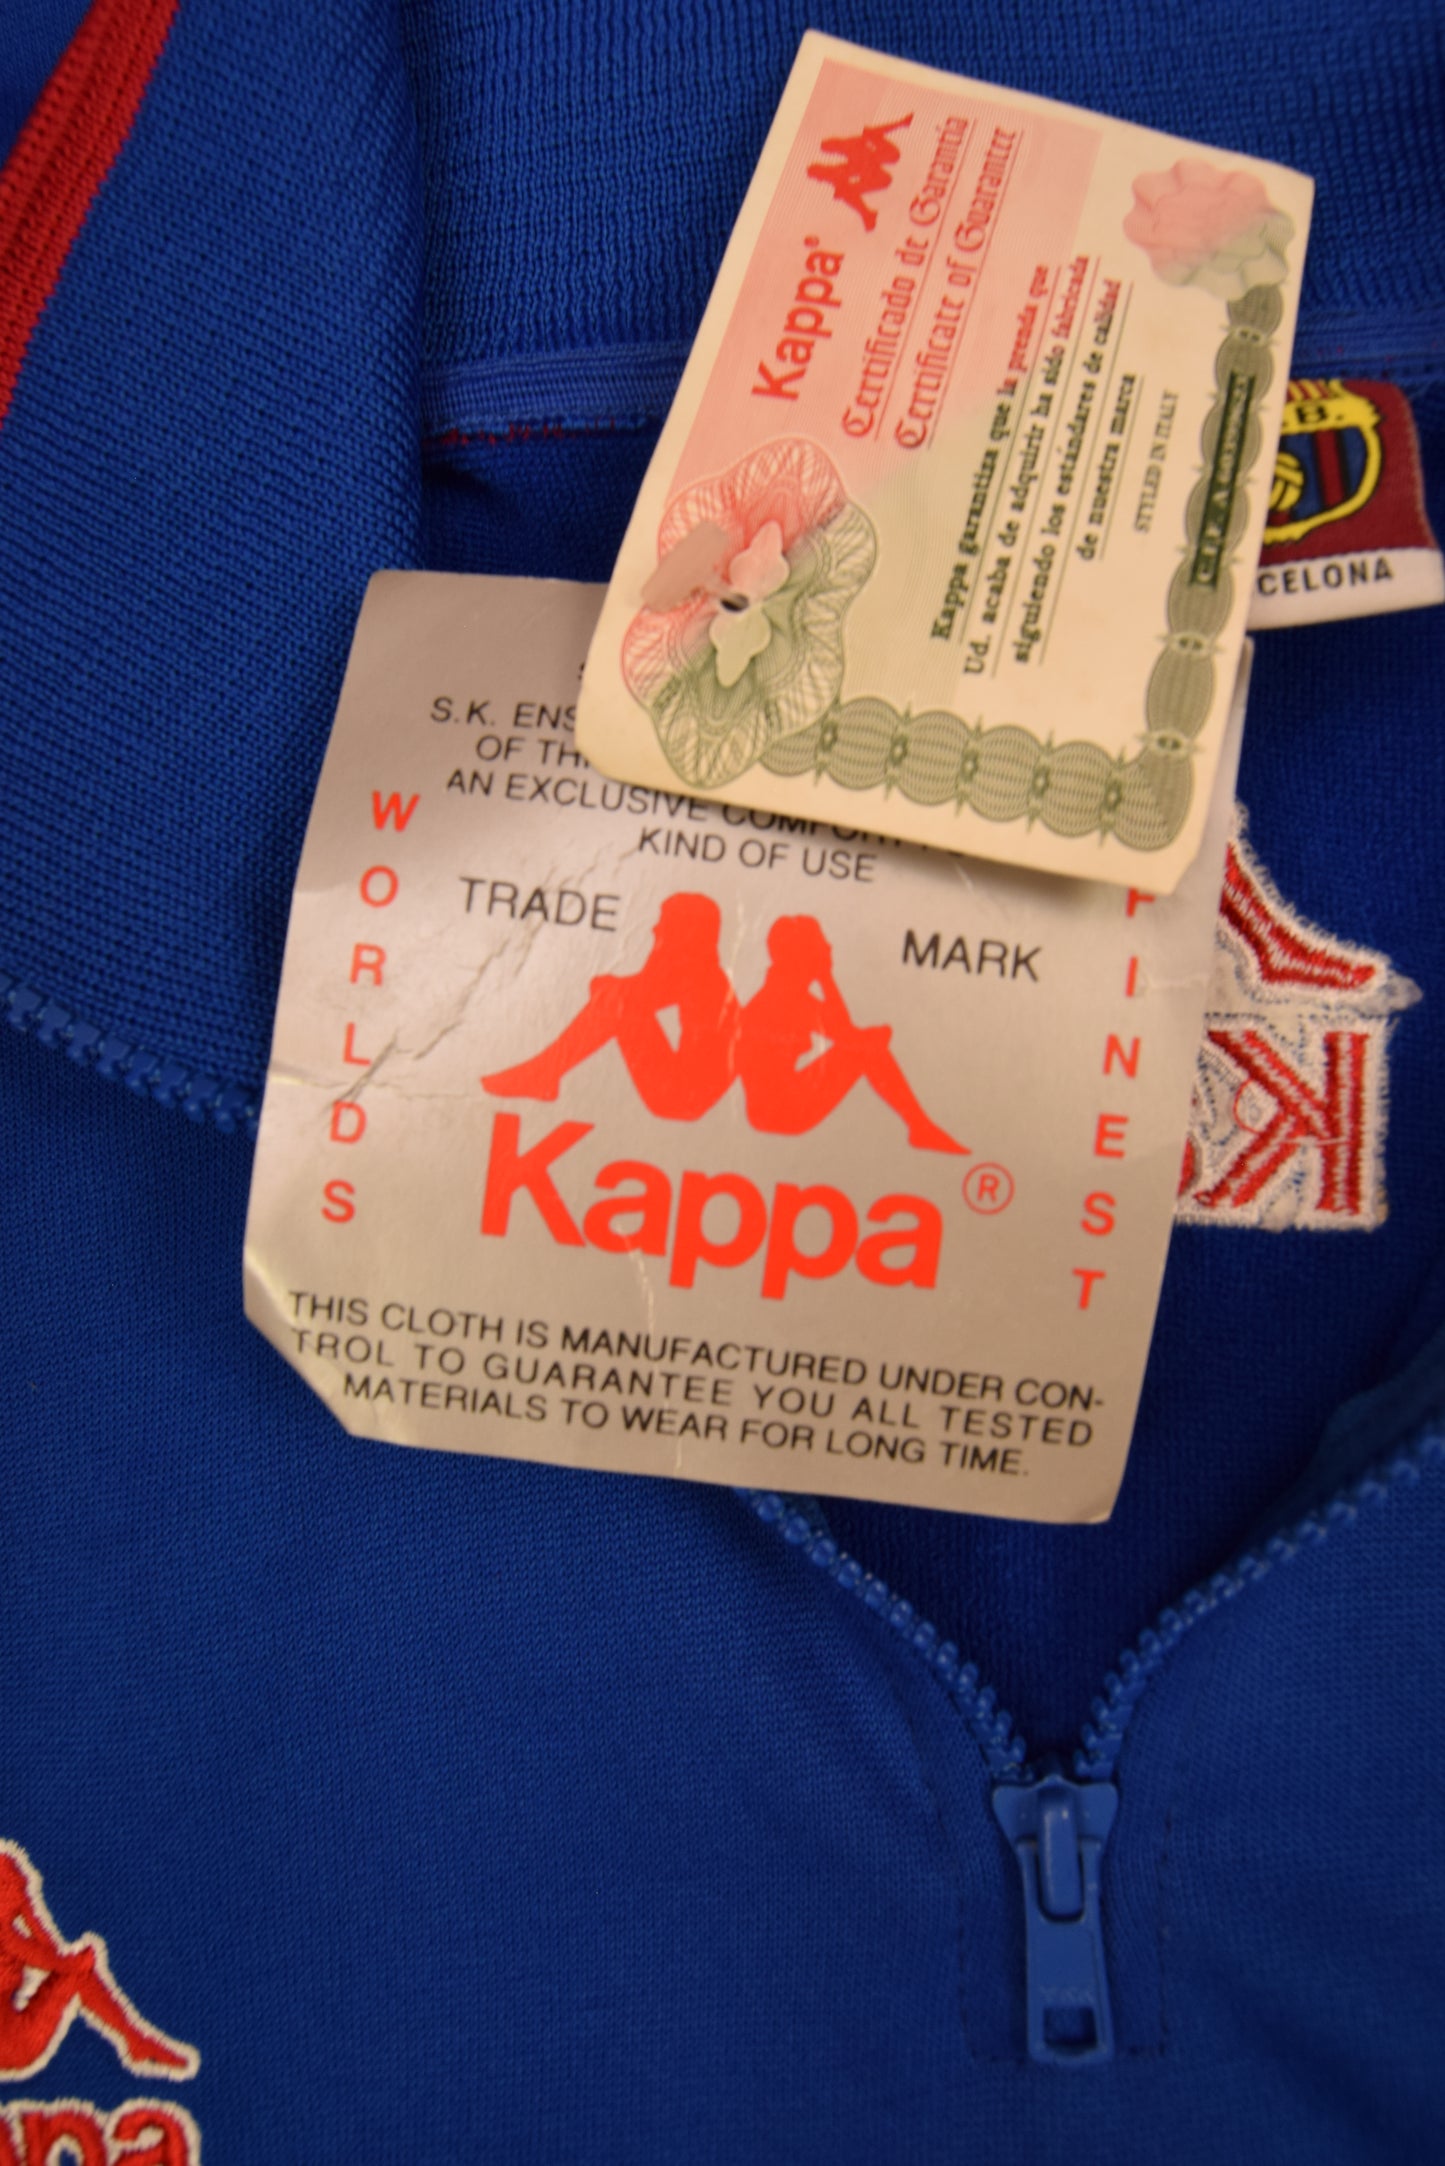 Vintage 90's NWT Barcelona FCB Barça Kappa 1992 - 1995 Sweatshirt 1/4 Zip Blue BNWT Deadstock Size L Made EEC